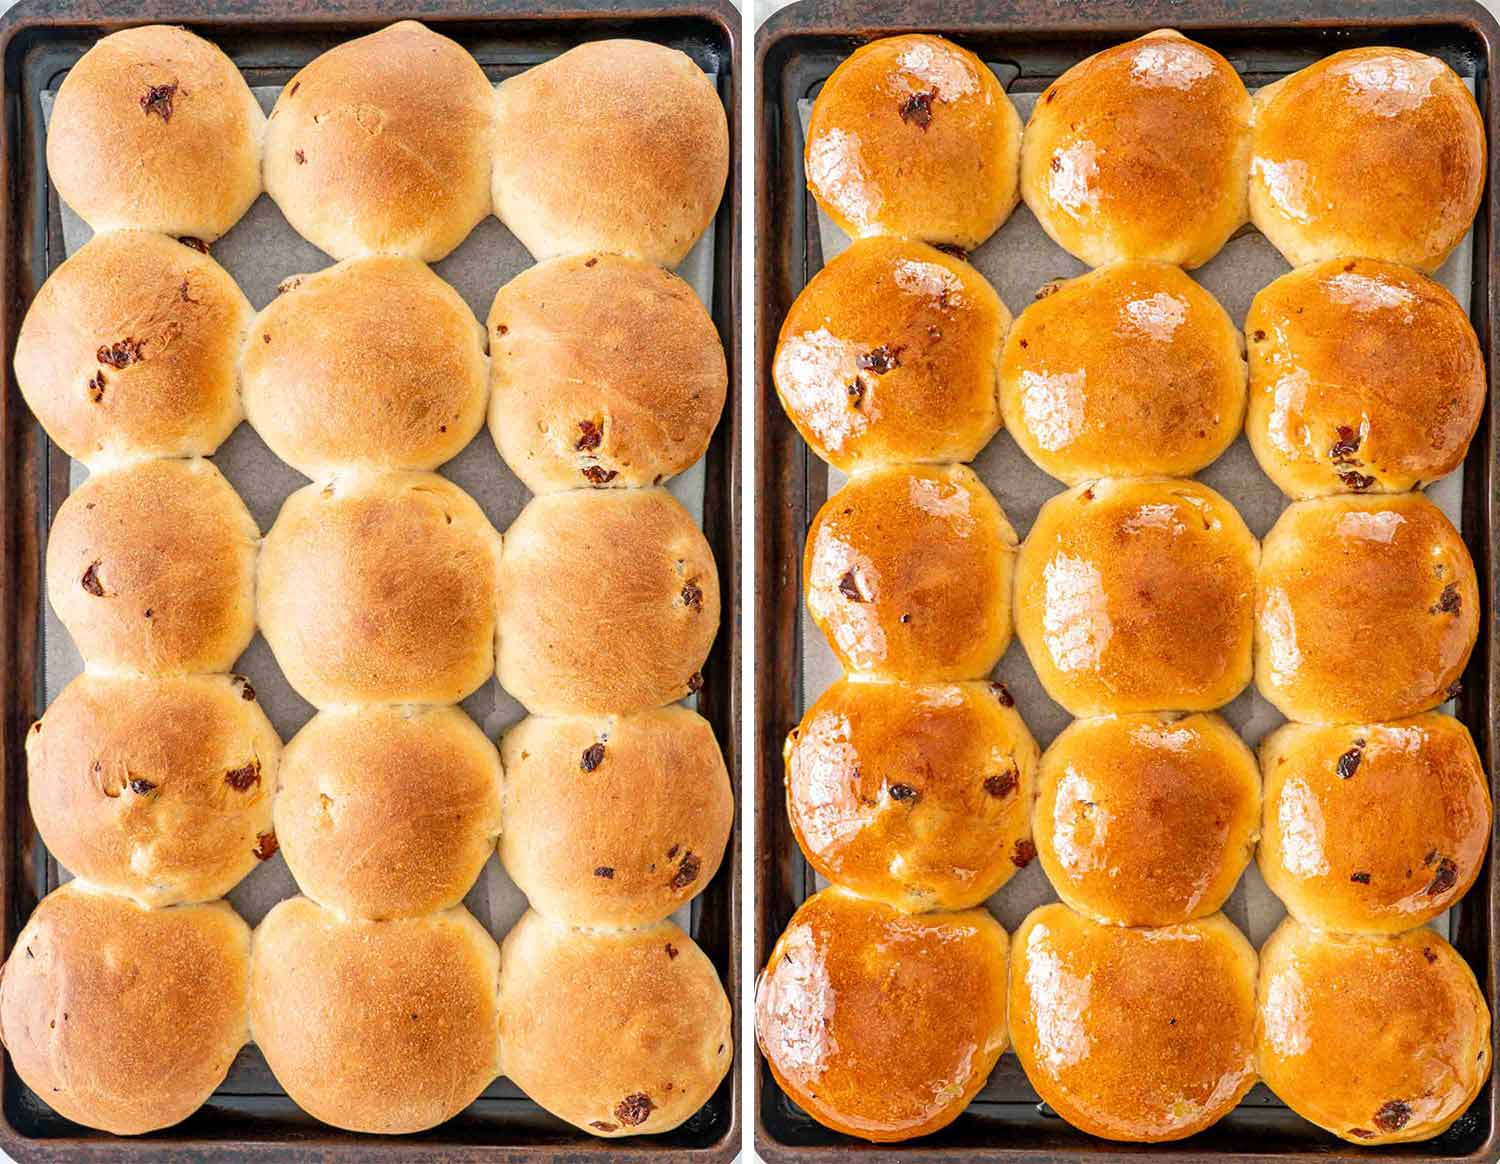 process shots showing how to make hot cross buns.